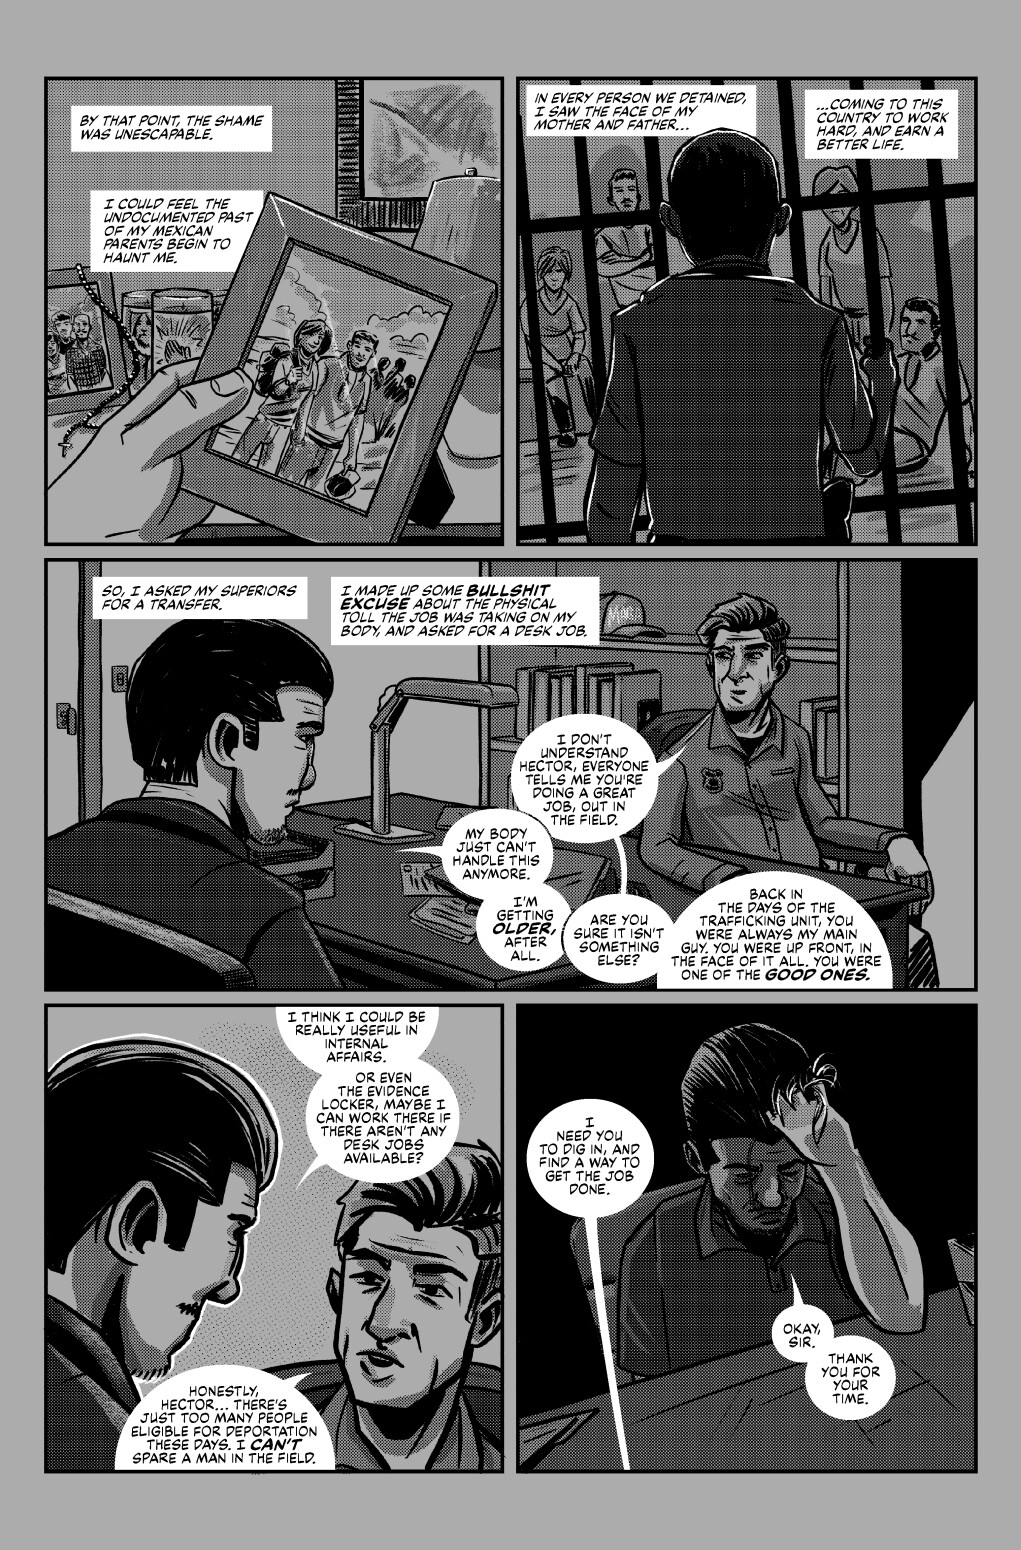 Sincerely, Agent Mejía: Page 6